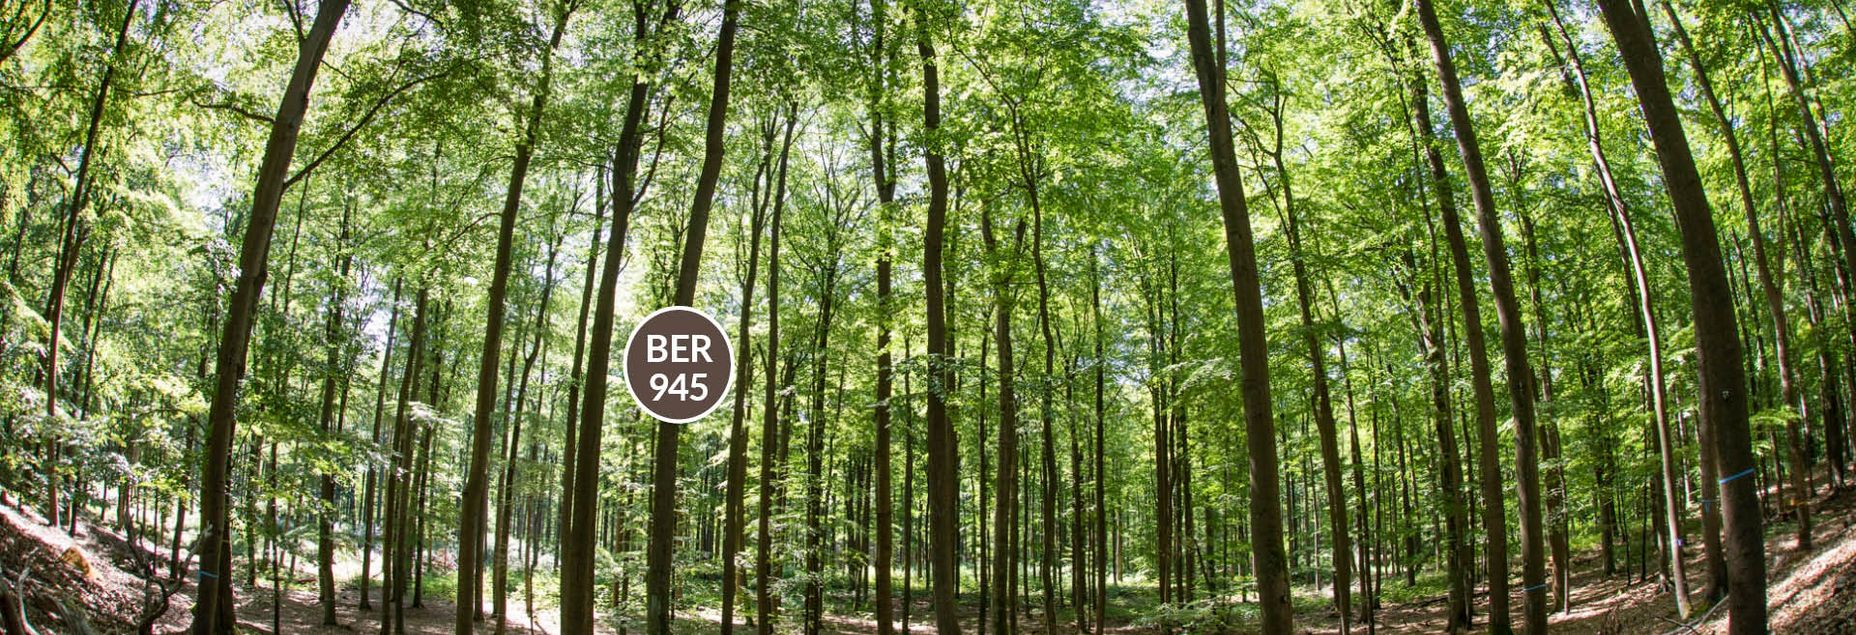 Baum BER 945 - Fisheyeperspektive